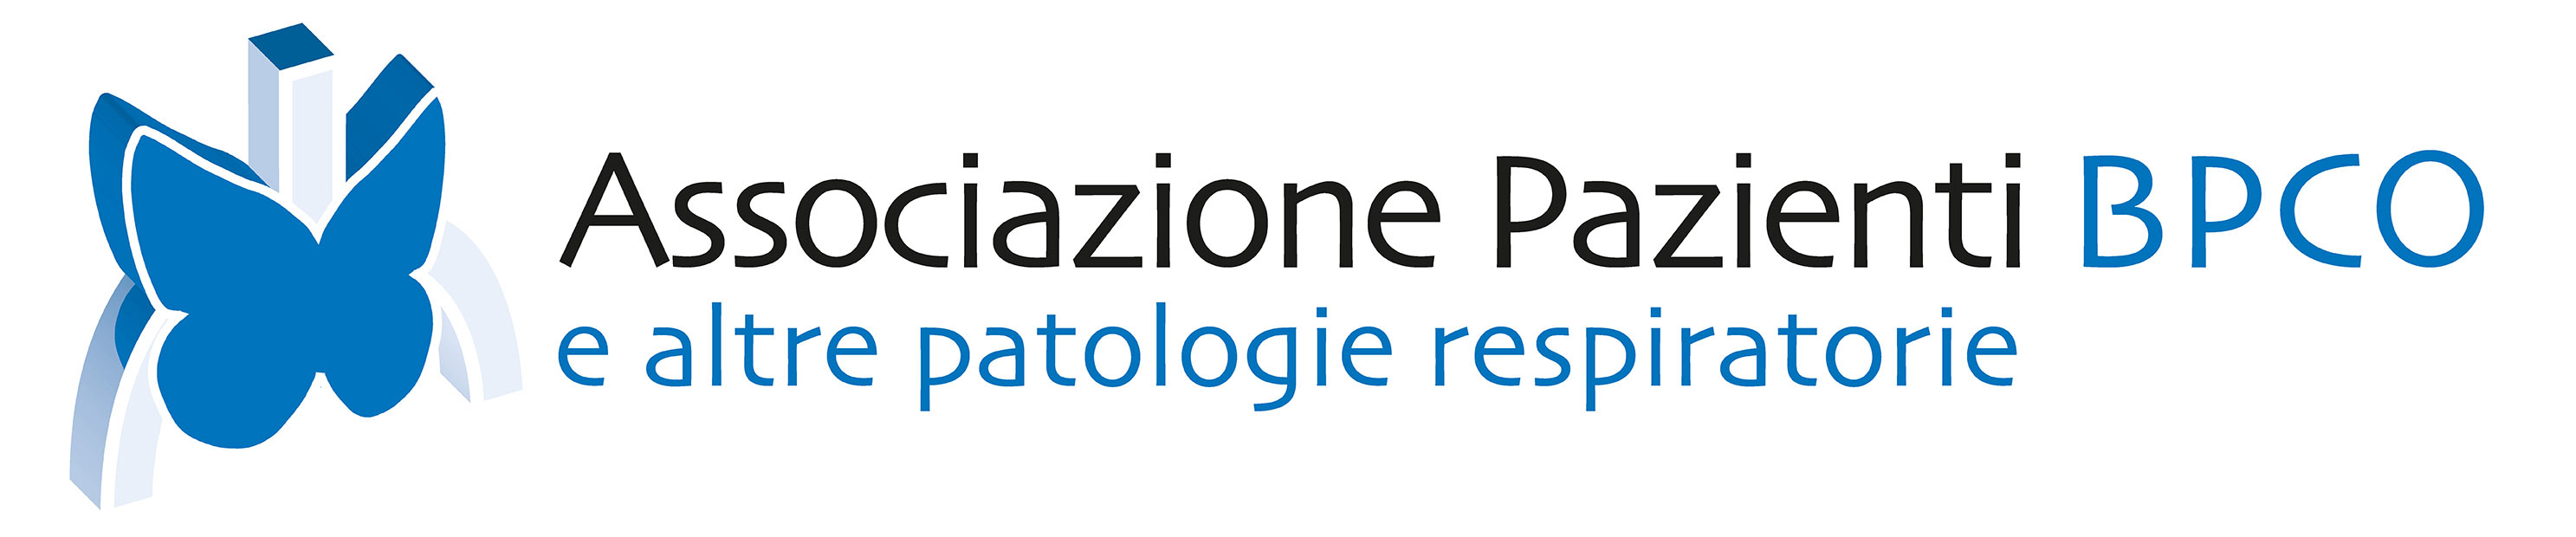 Associazione Italiana Pazienti BPCO ONLUS